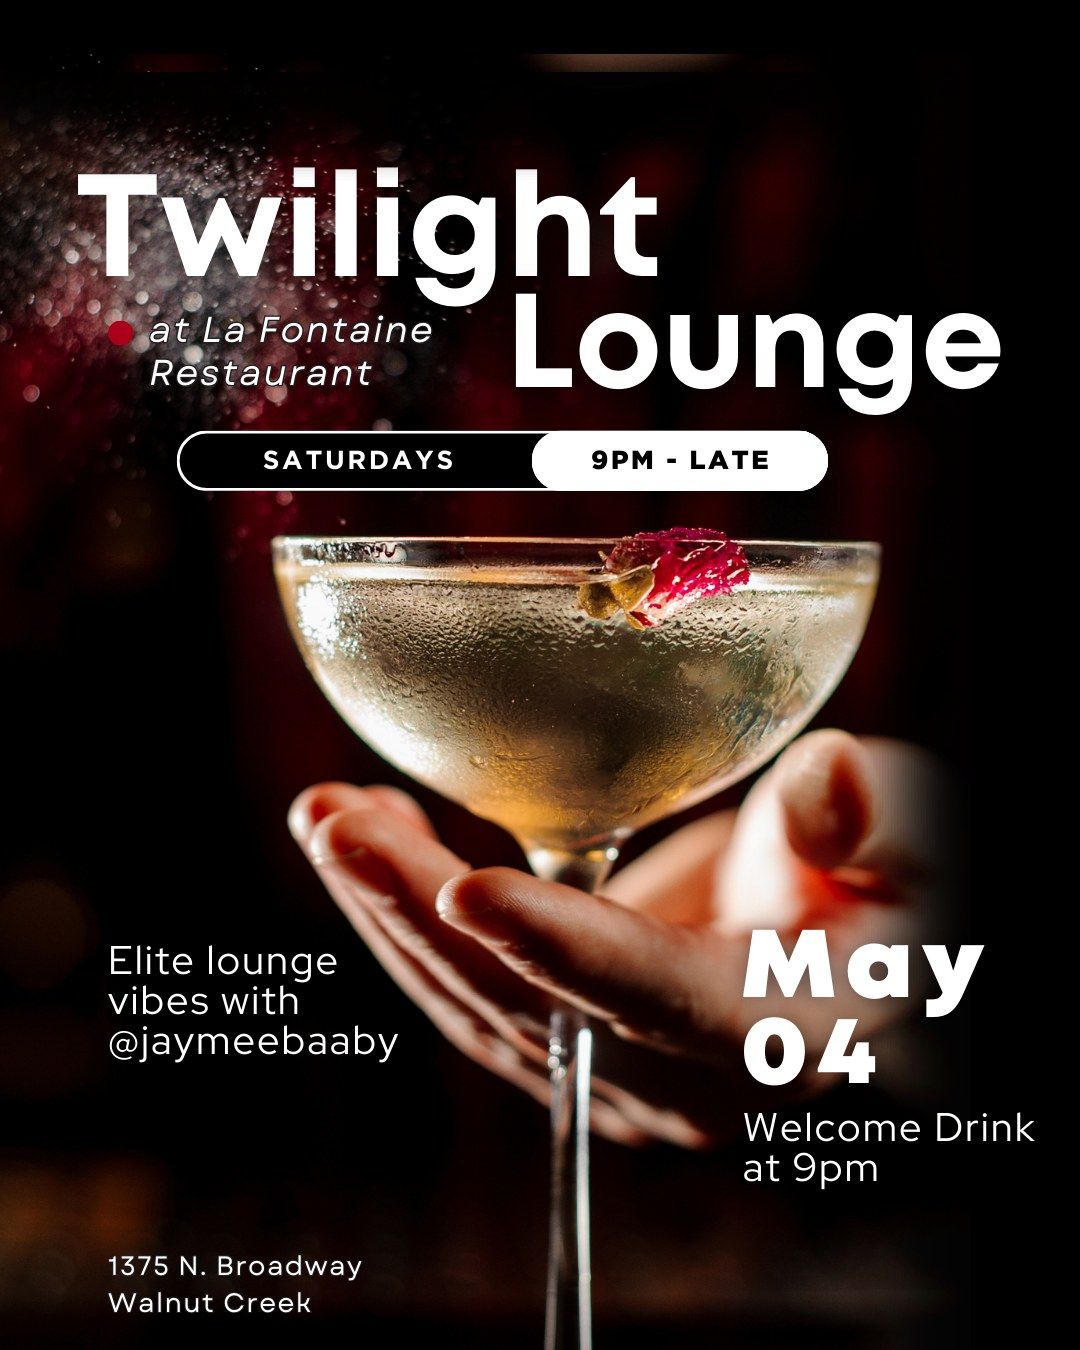 Twilight Lounge at La Fontaine Restaurant